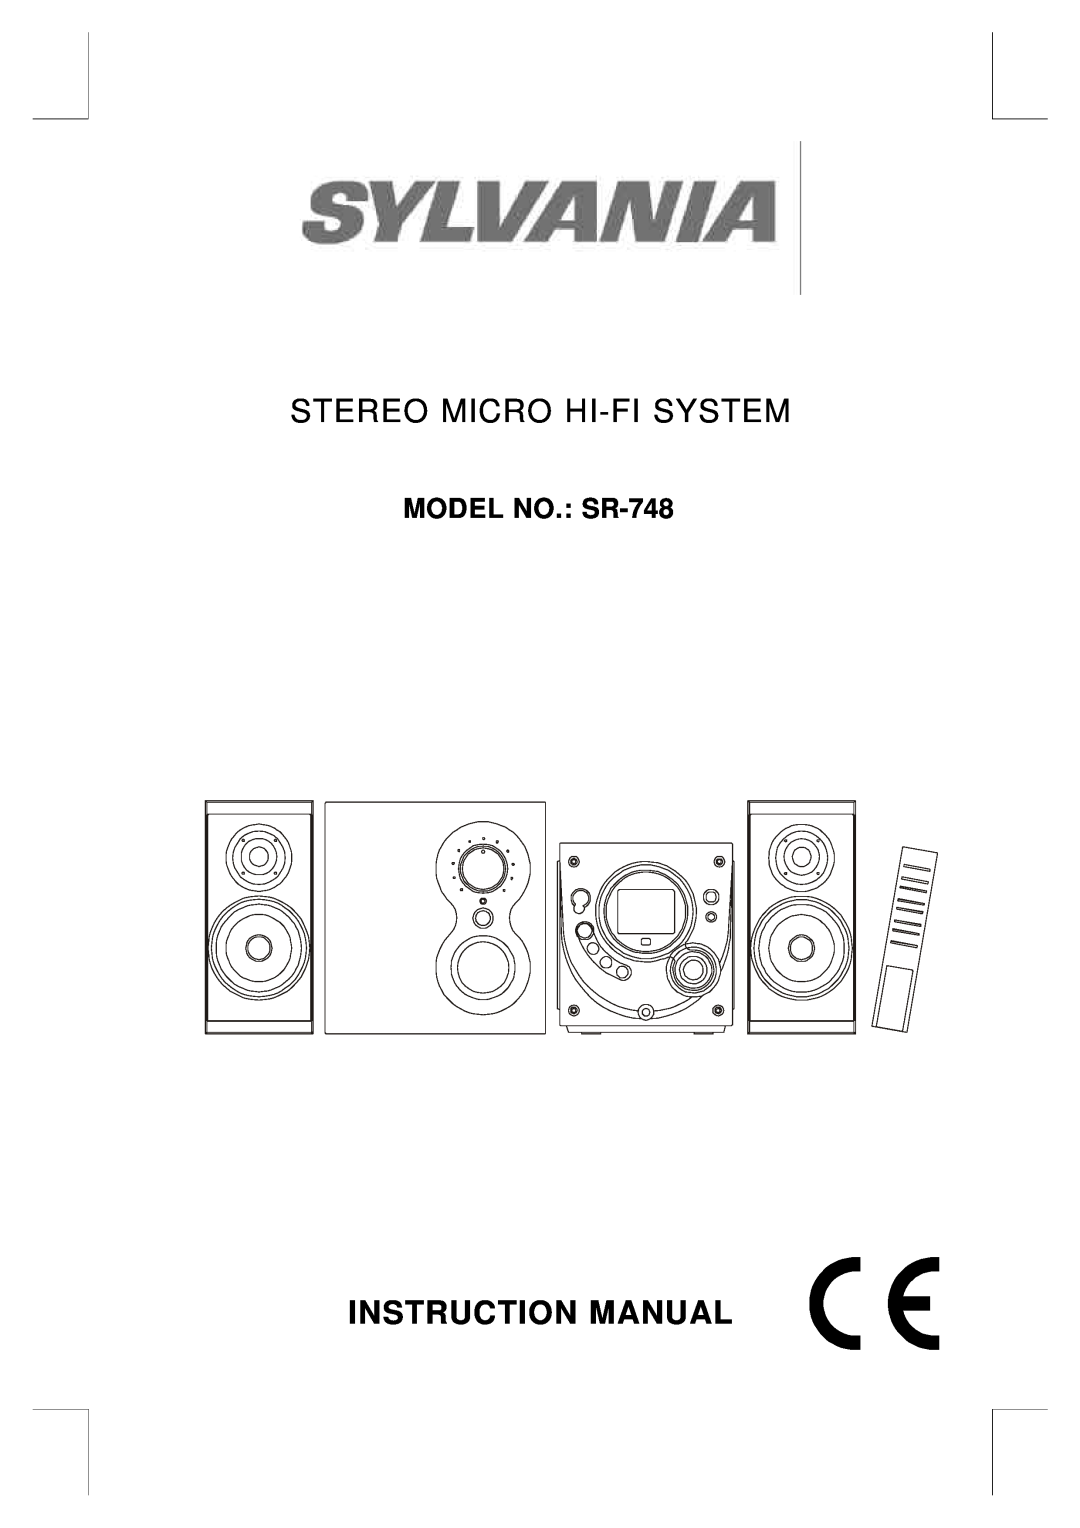 Sylvania instruction manual Stereo Micro Hi-Fisystem, MODEL NO. SR-748 